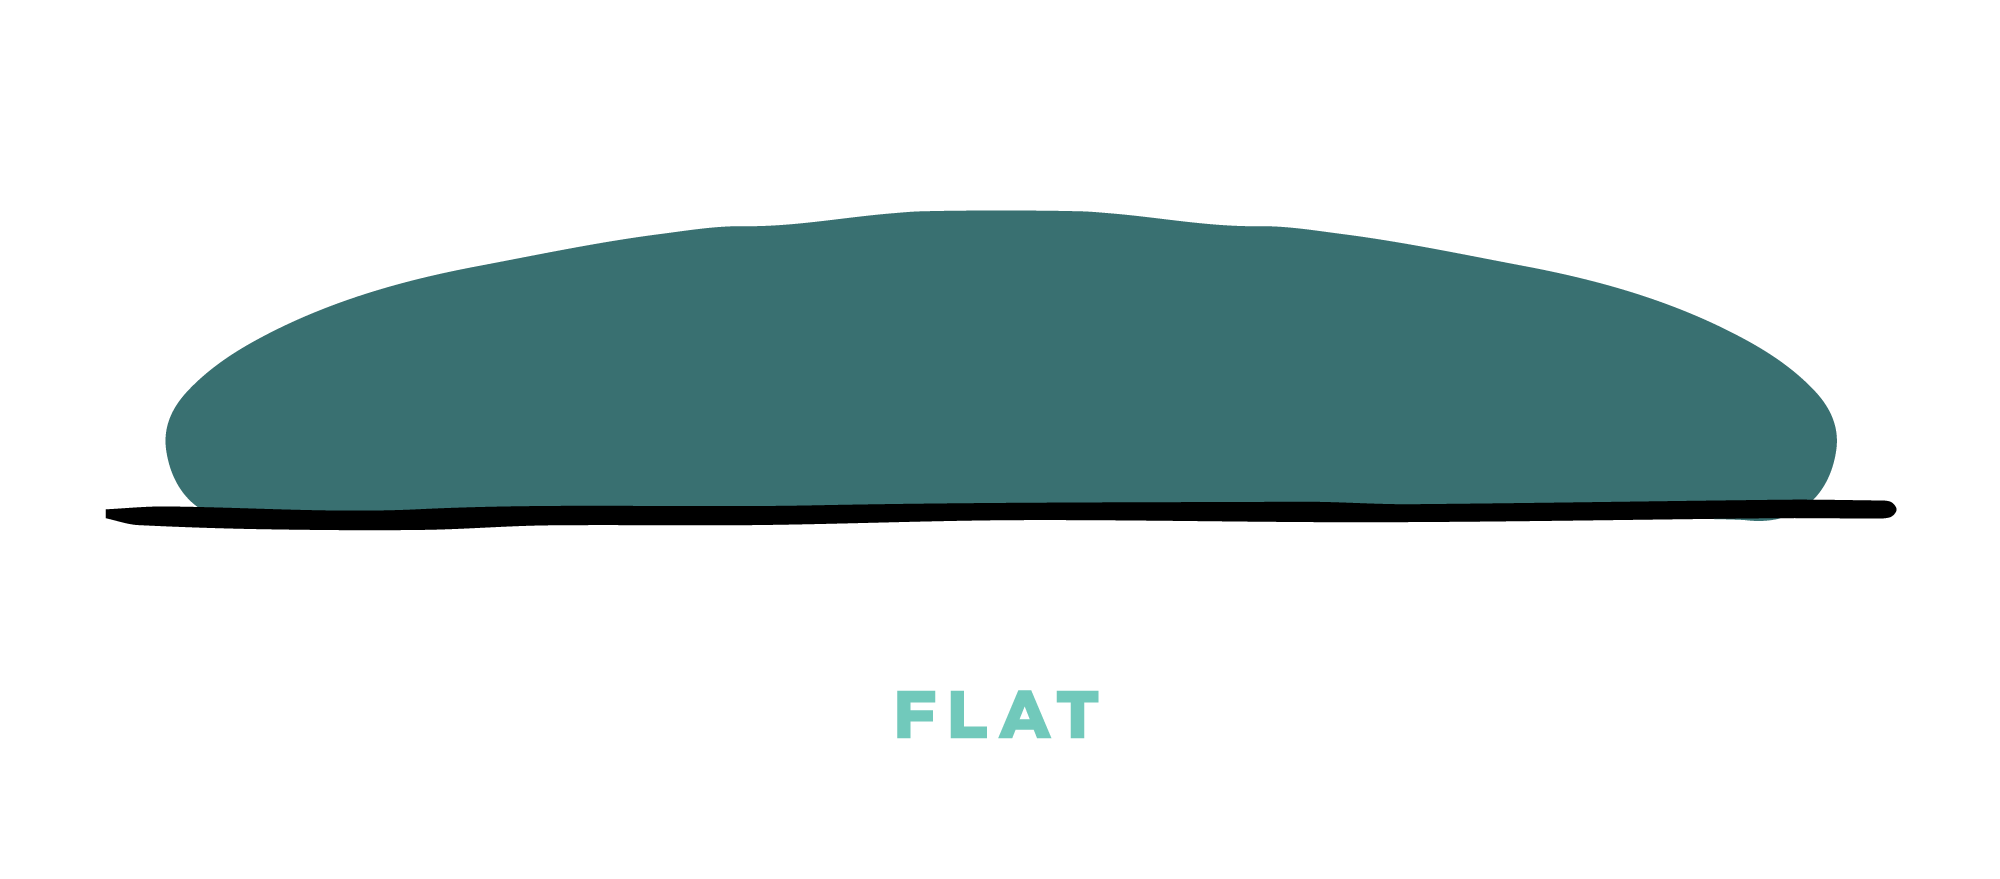 illustration Flat Surfboard Bottom Contour